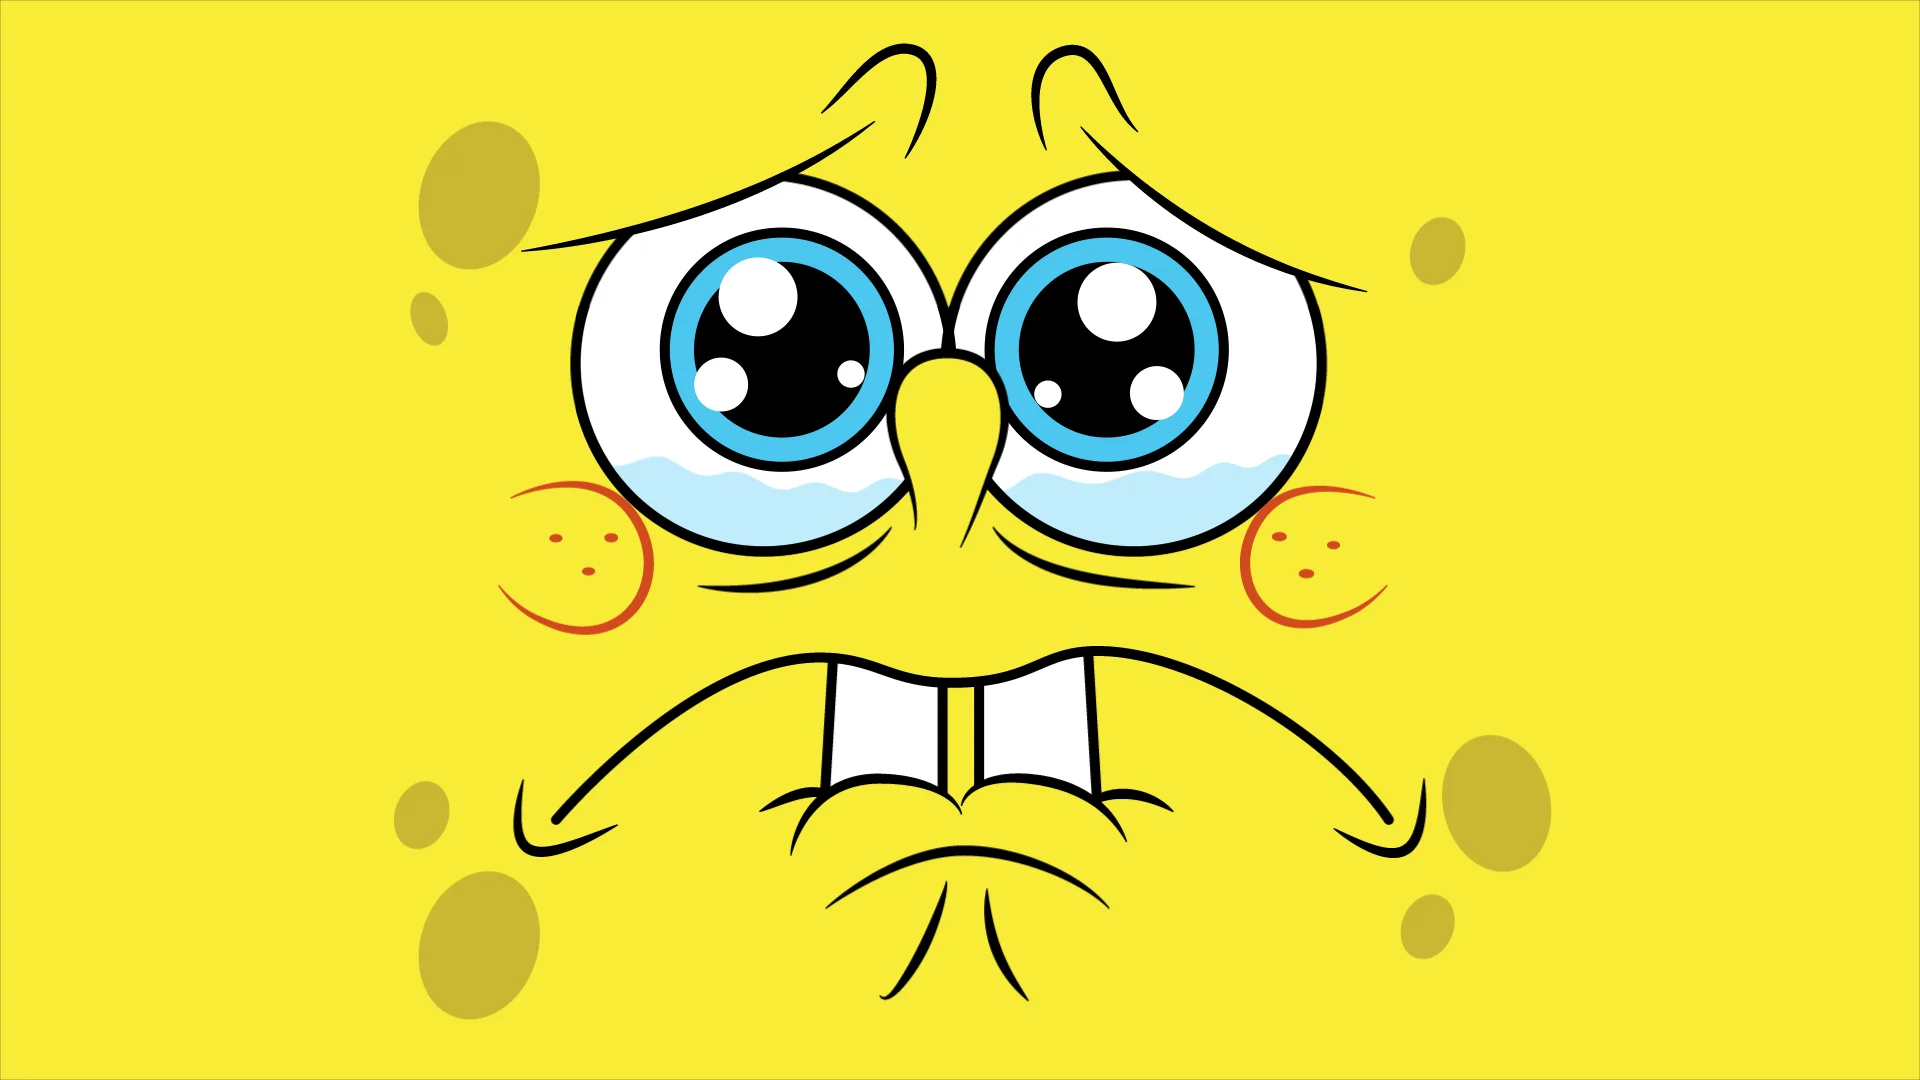 Sad Spongebob